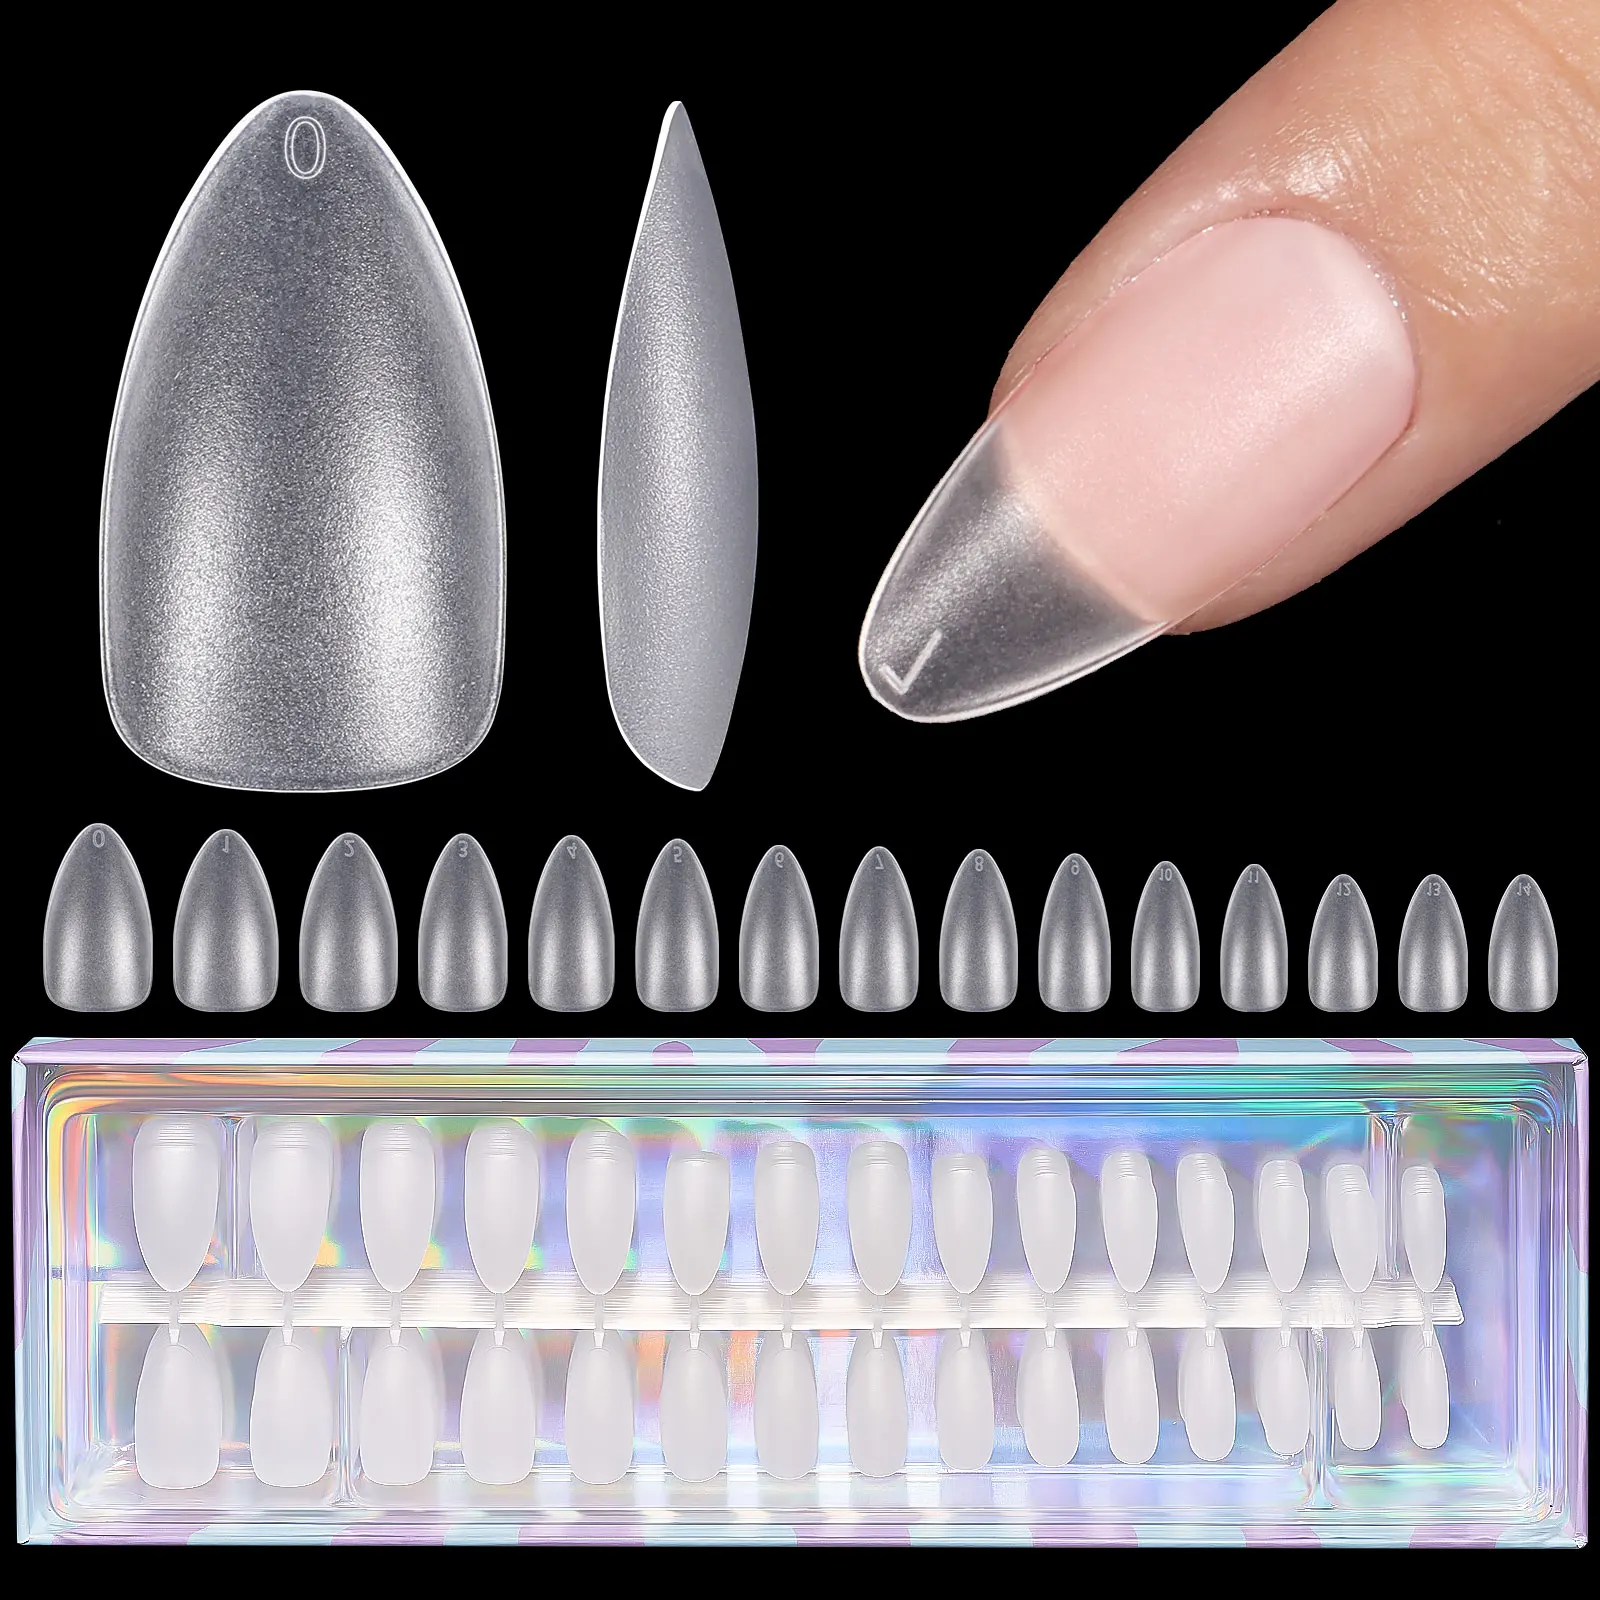 

Wholesale 300pcs Soft Gel X Nail Tips Short Almond Square Fake Nails Full Cover Non C Curve False Artificial Nails For Salon